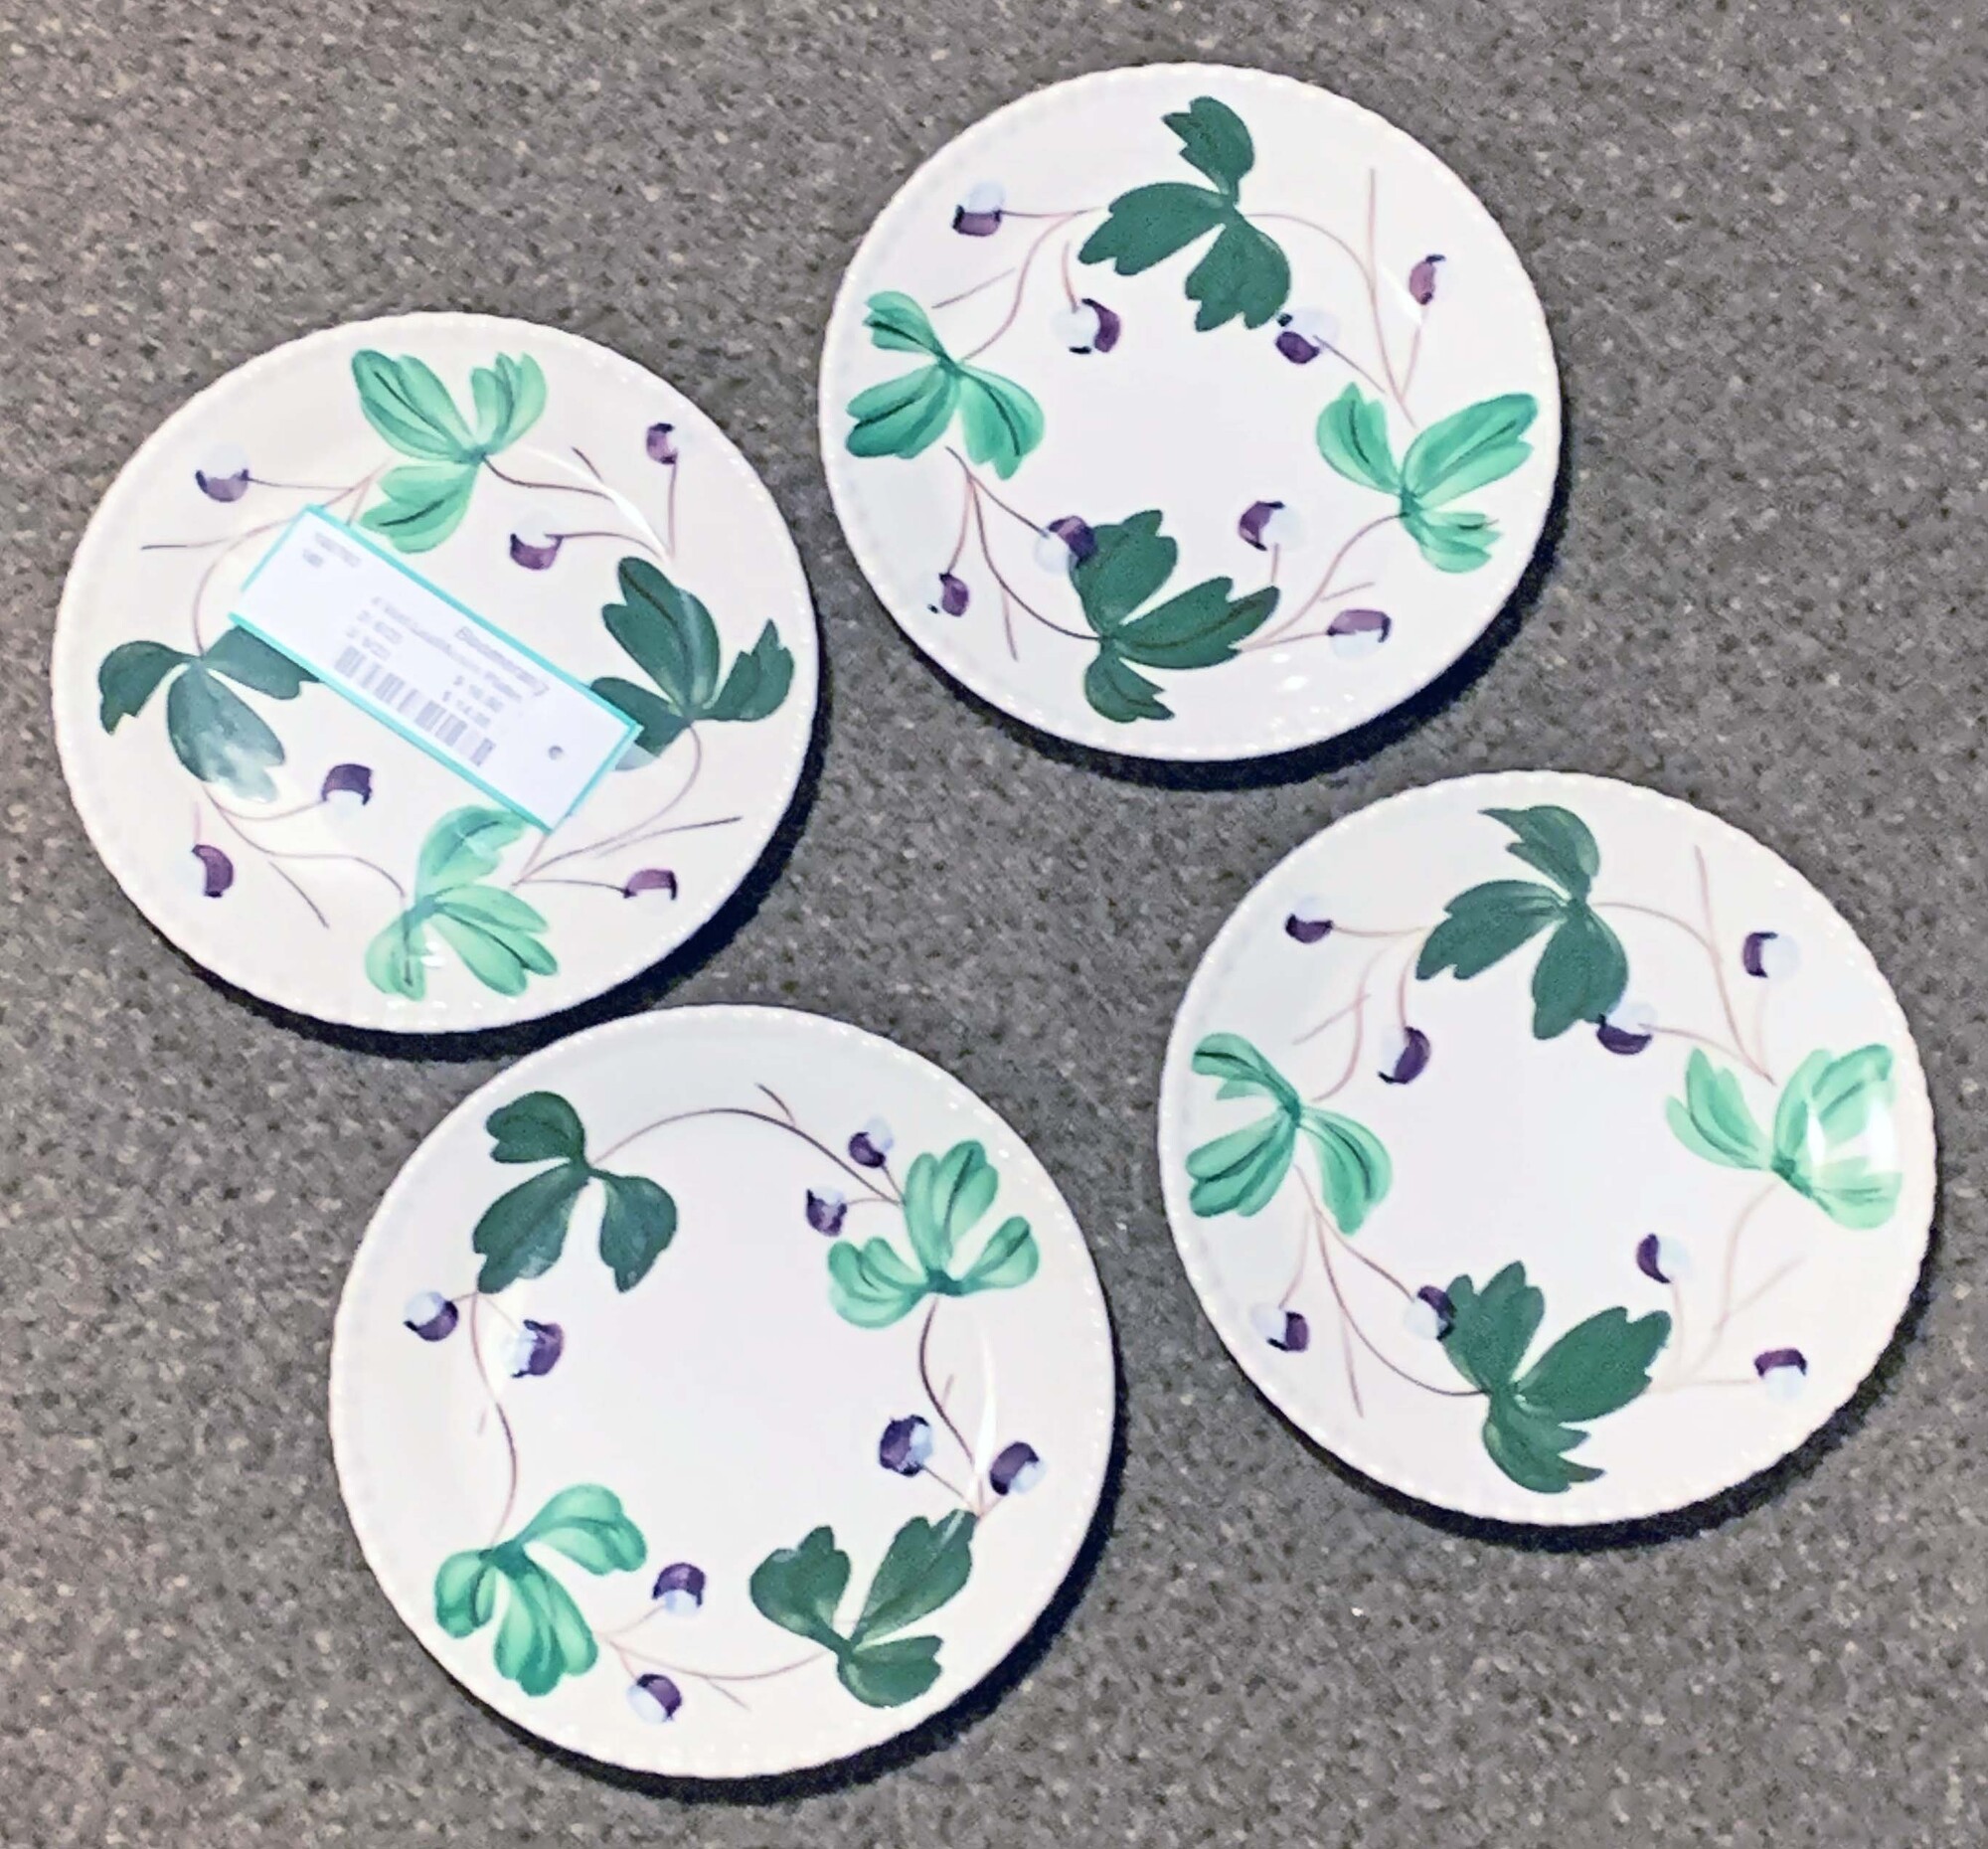 Four Vintage Leaft/Acorn Plates - $16.50.
6 In Round